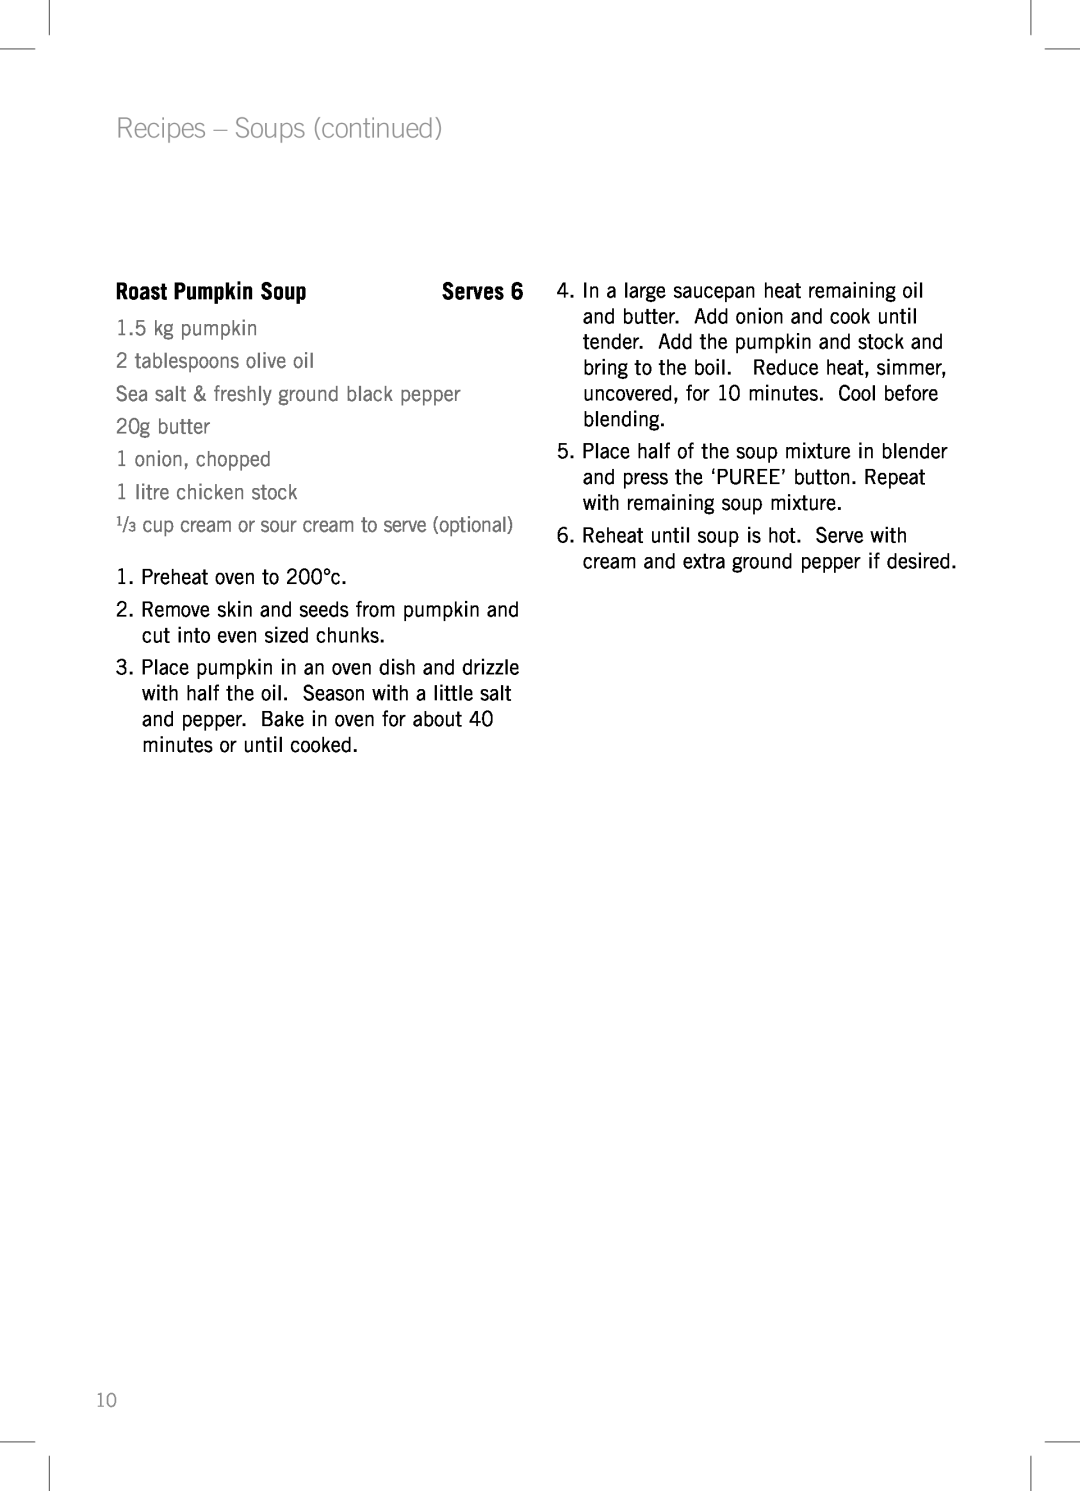 Sunbeam PB7910 manual Recipes - Soups continued, Roast Pumpkin Soup, kg pumpkin 2 tablespoons olive oil 